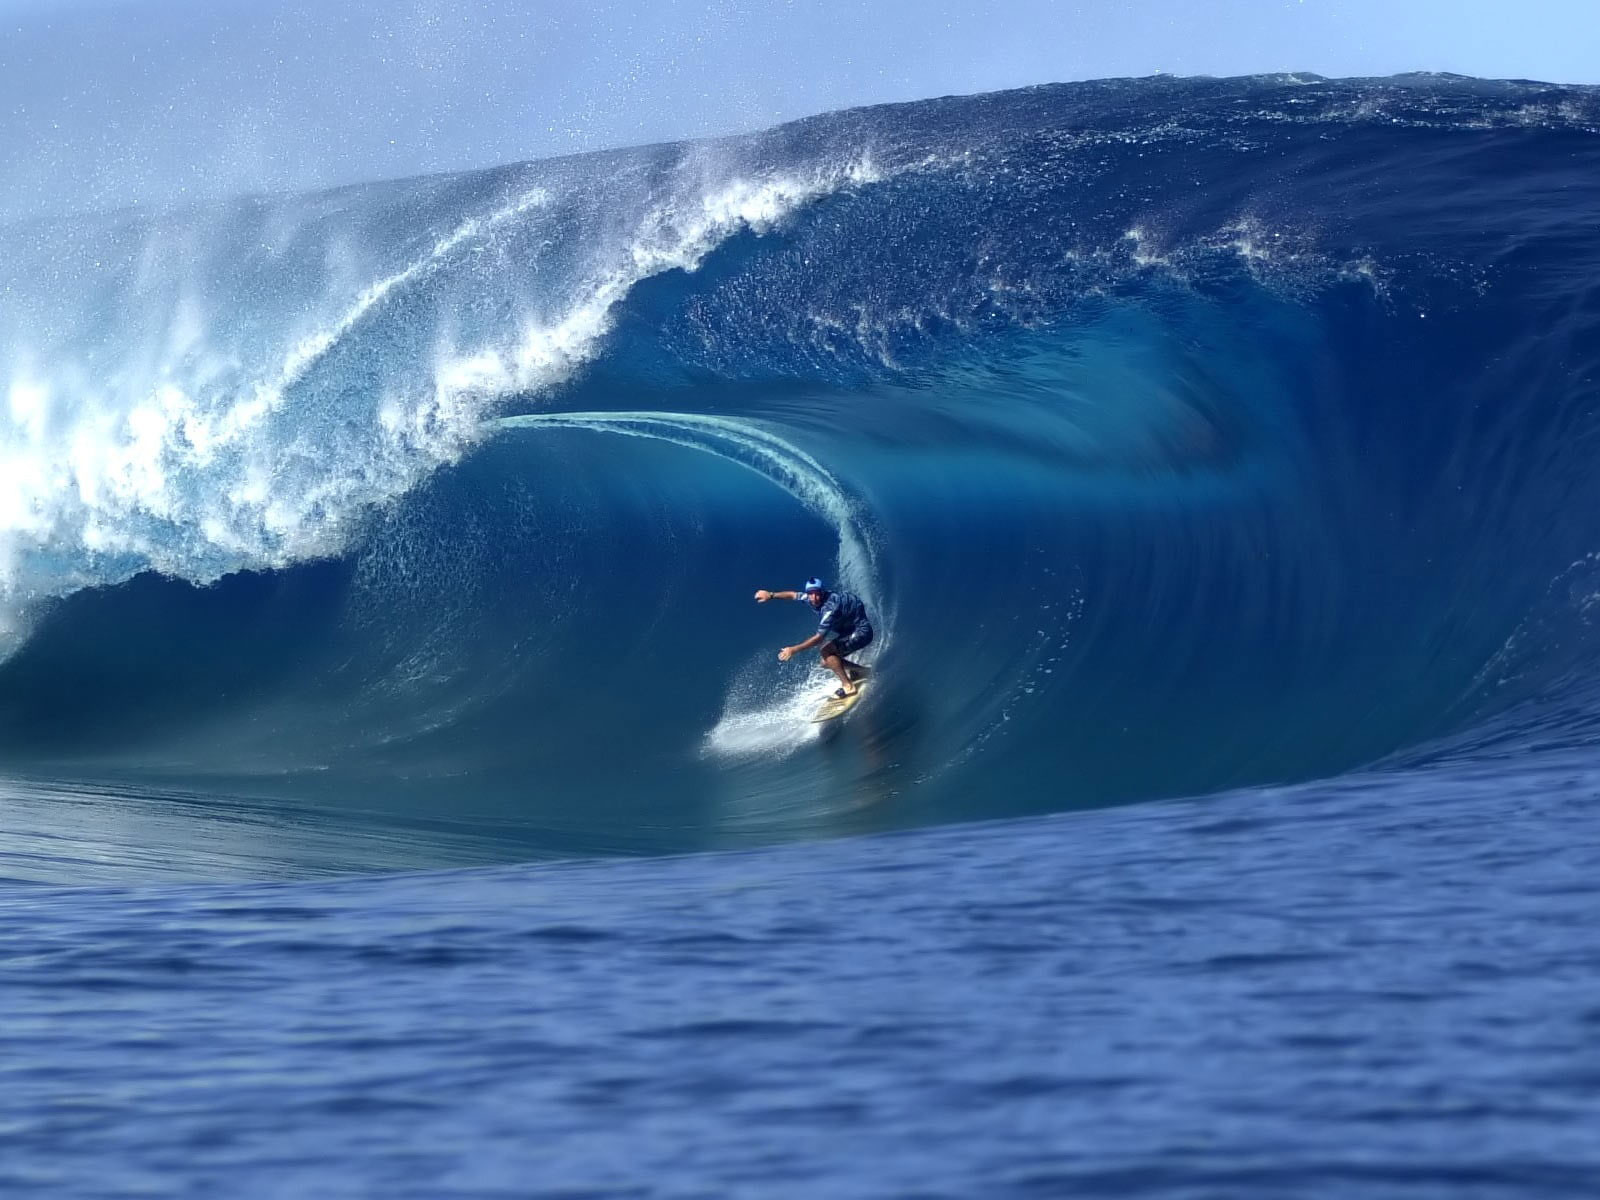 Men’s blue wet suit, surfing, surfers, sea, waves, nature, water